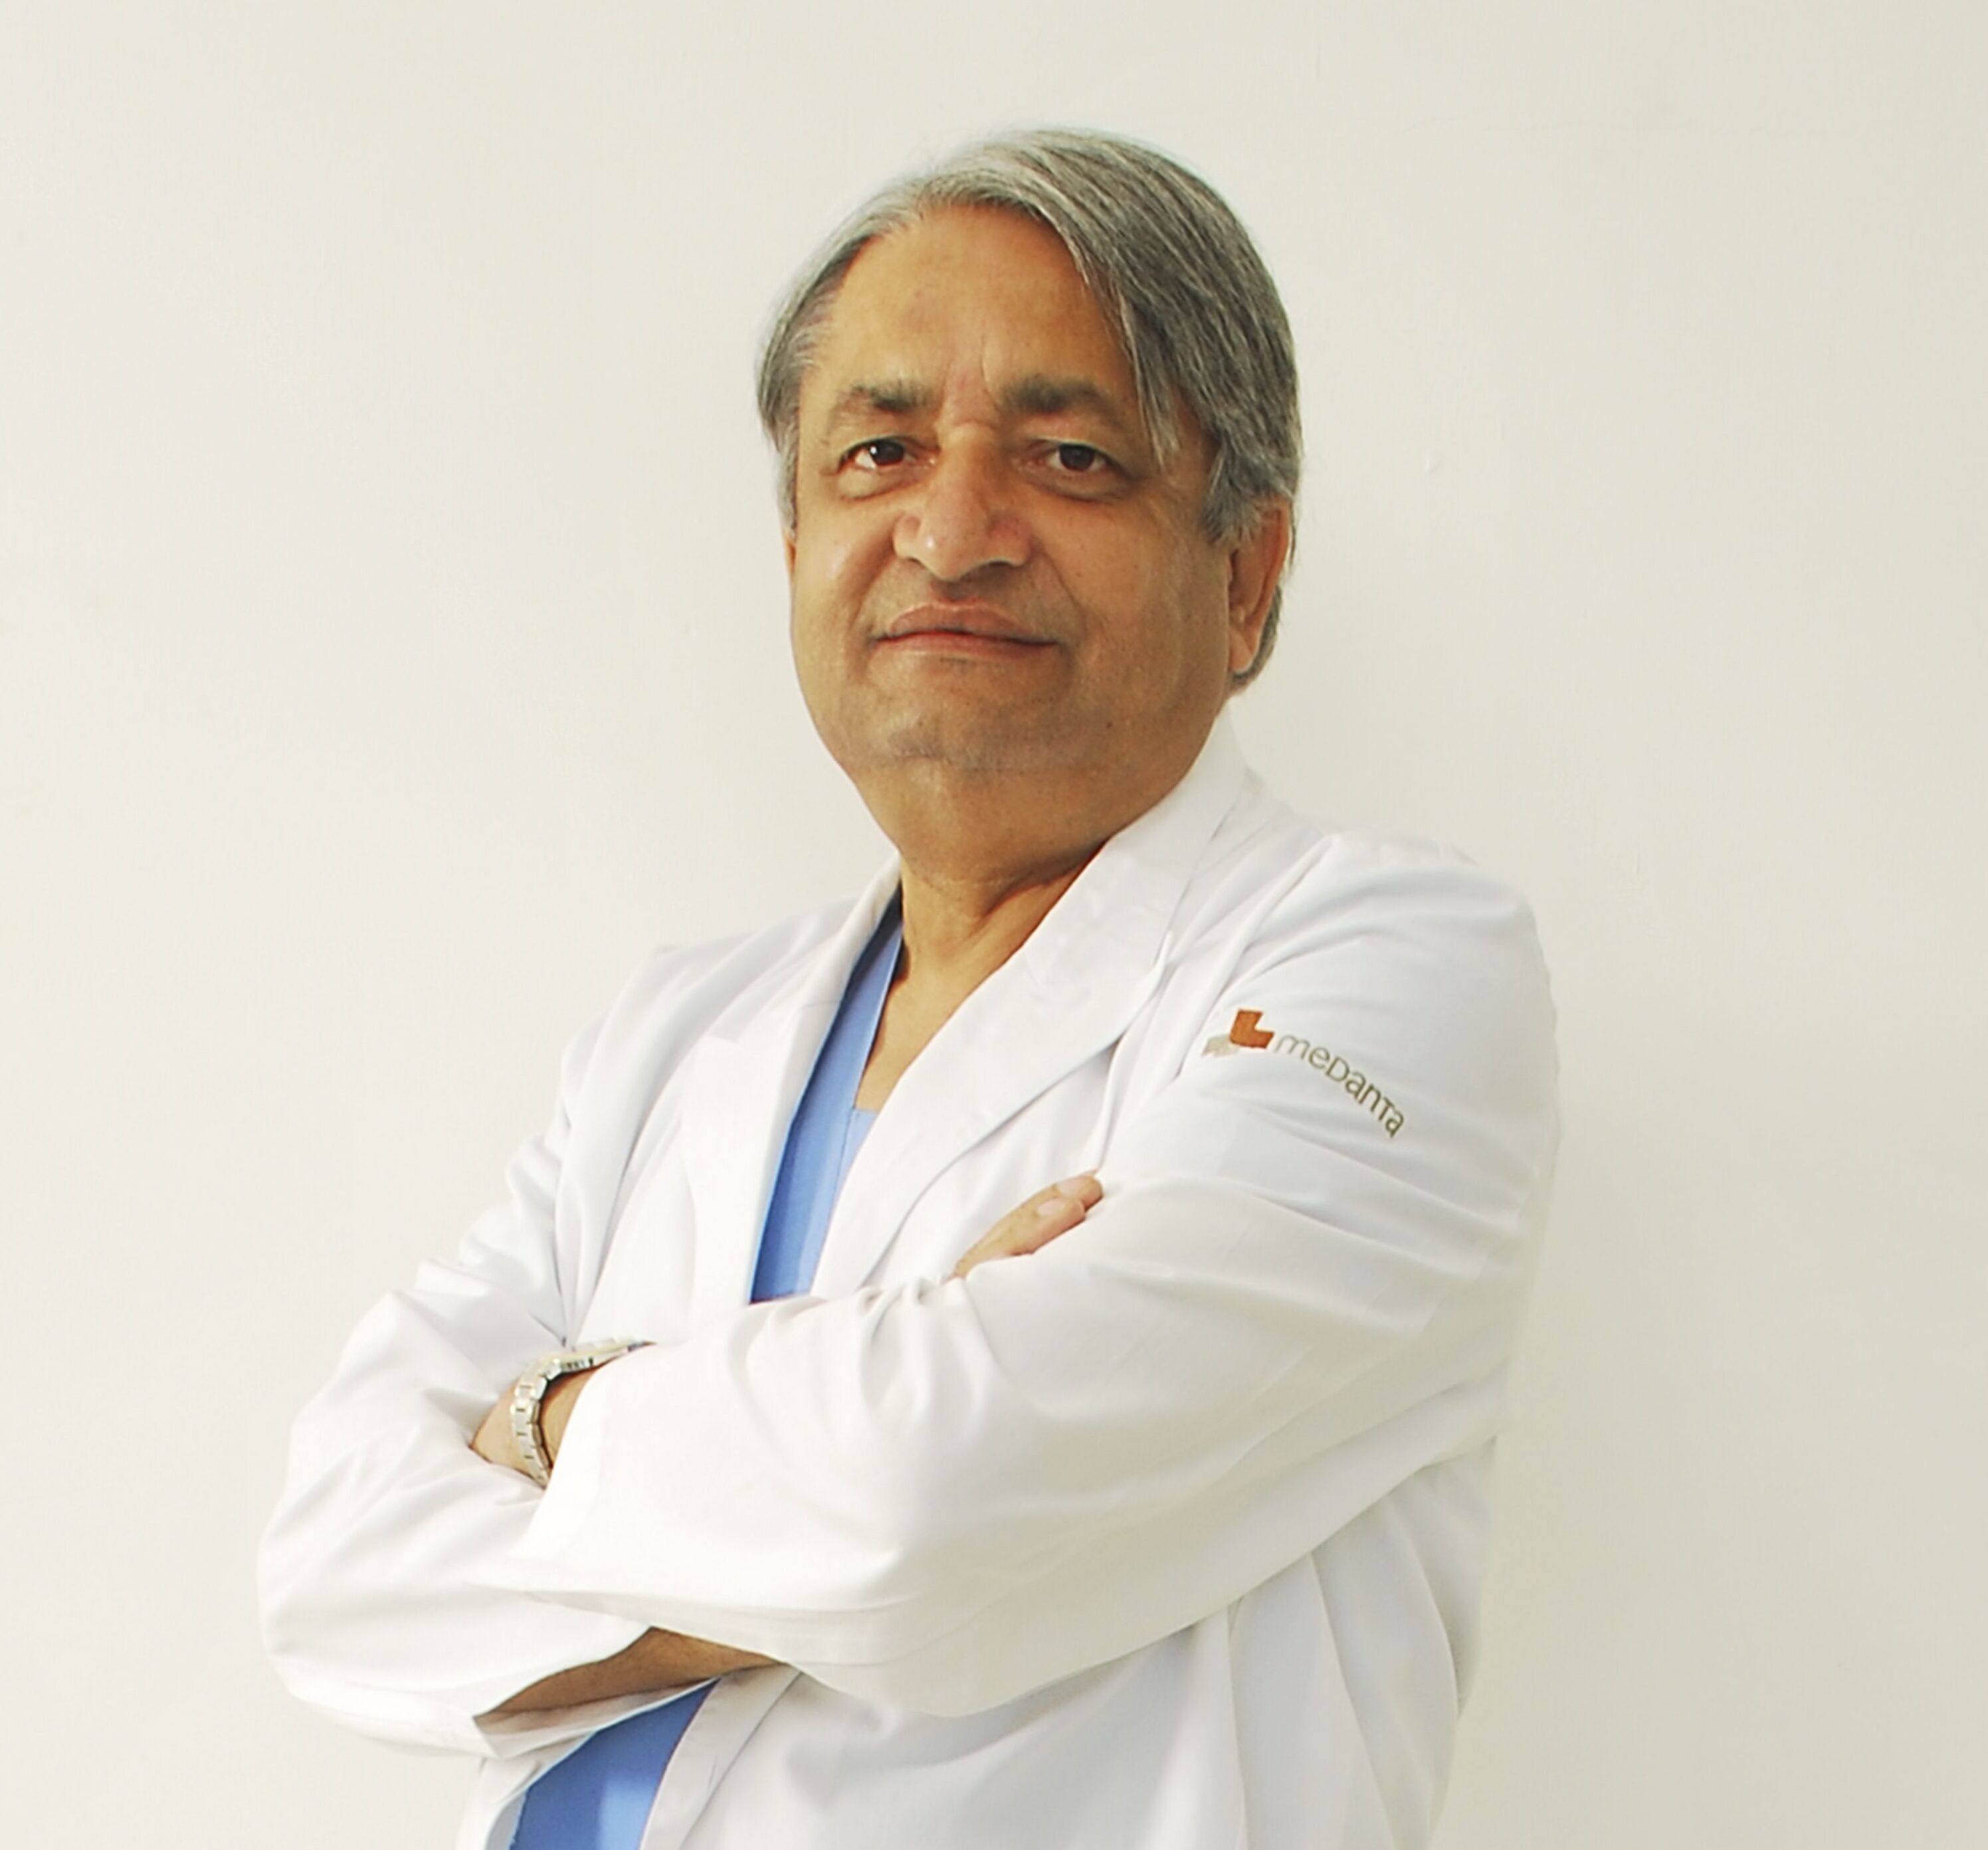 consulter dr ajaya nand jha meilleur neurochirurgien medanta gurgaon delhi